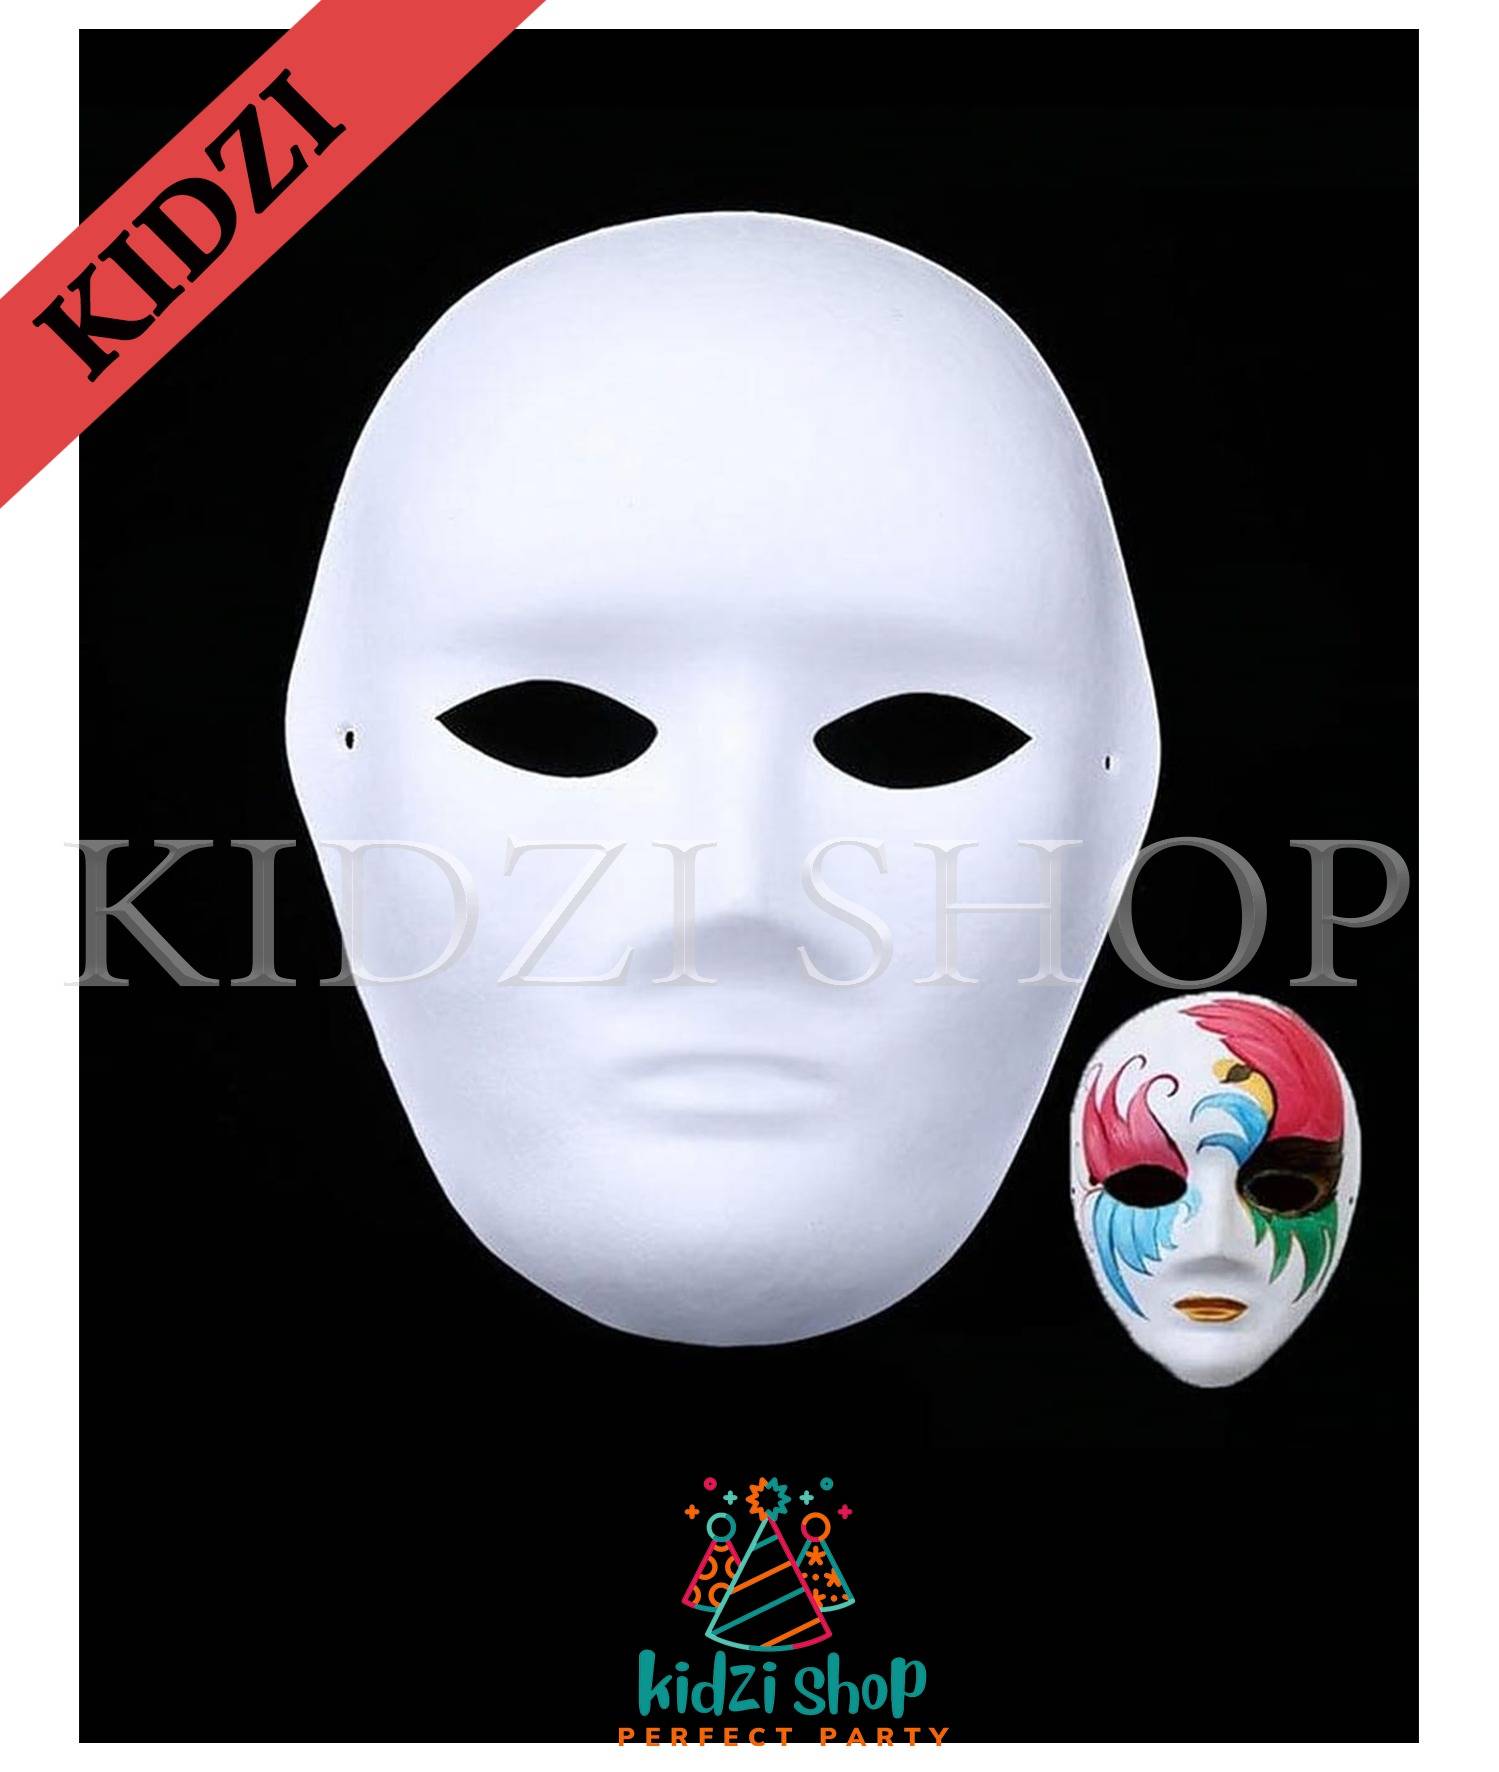 White Blank Mask